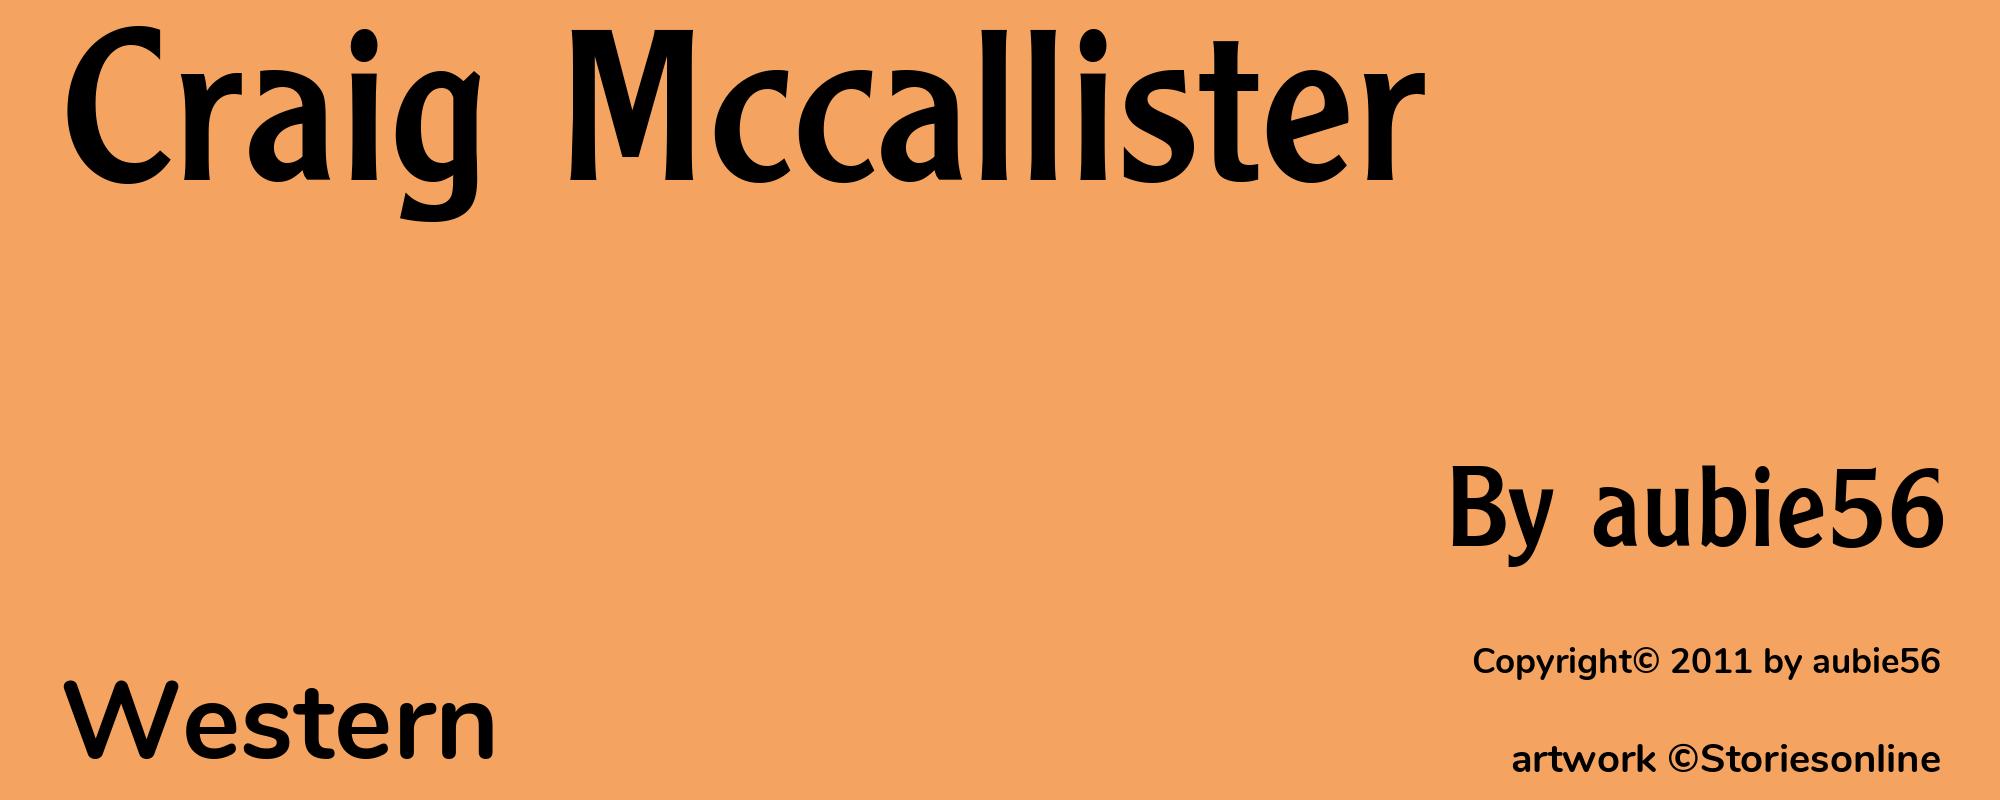 Craig Mccallister - Cover